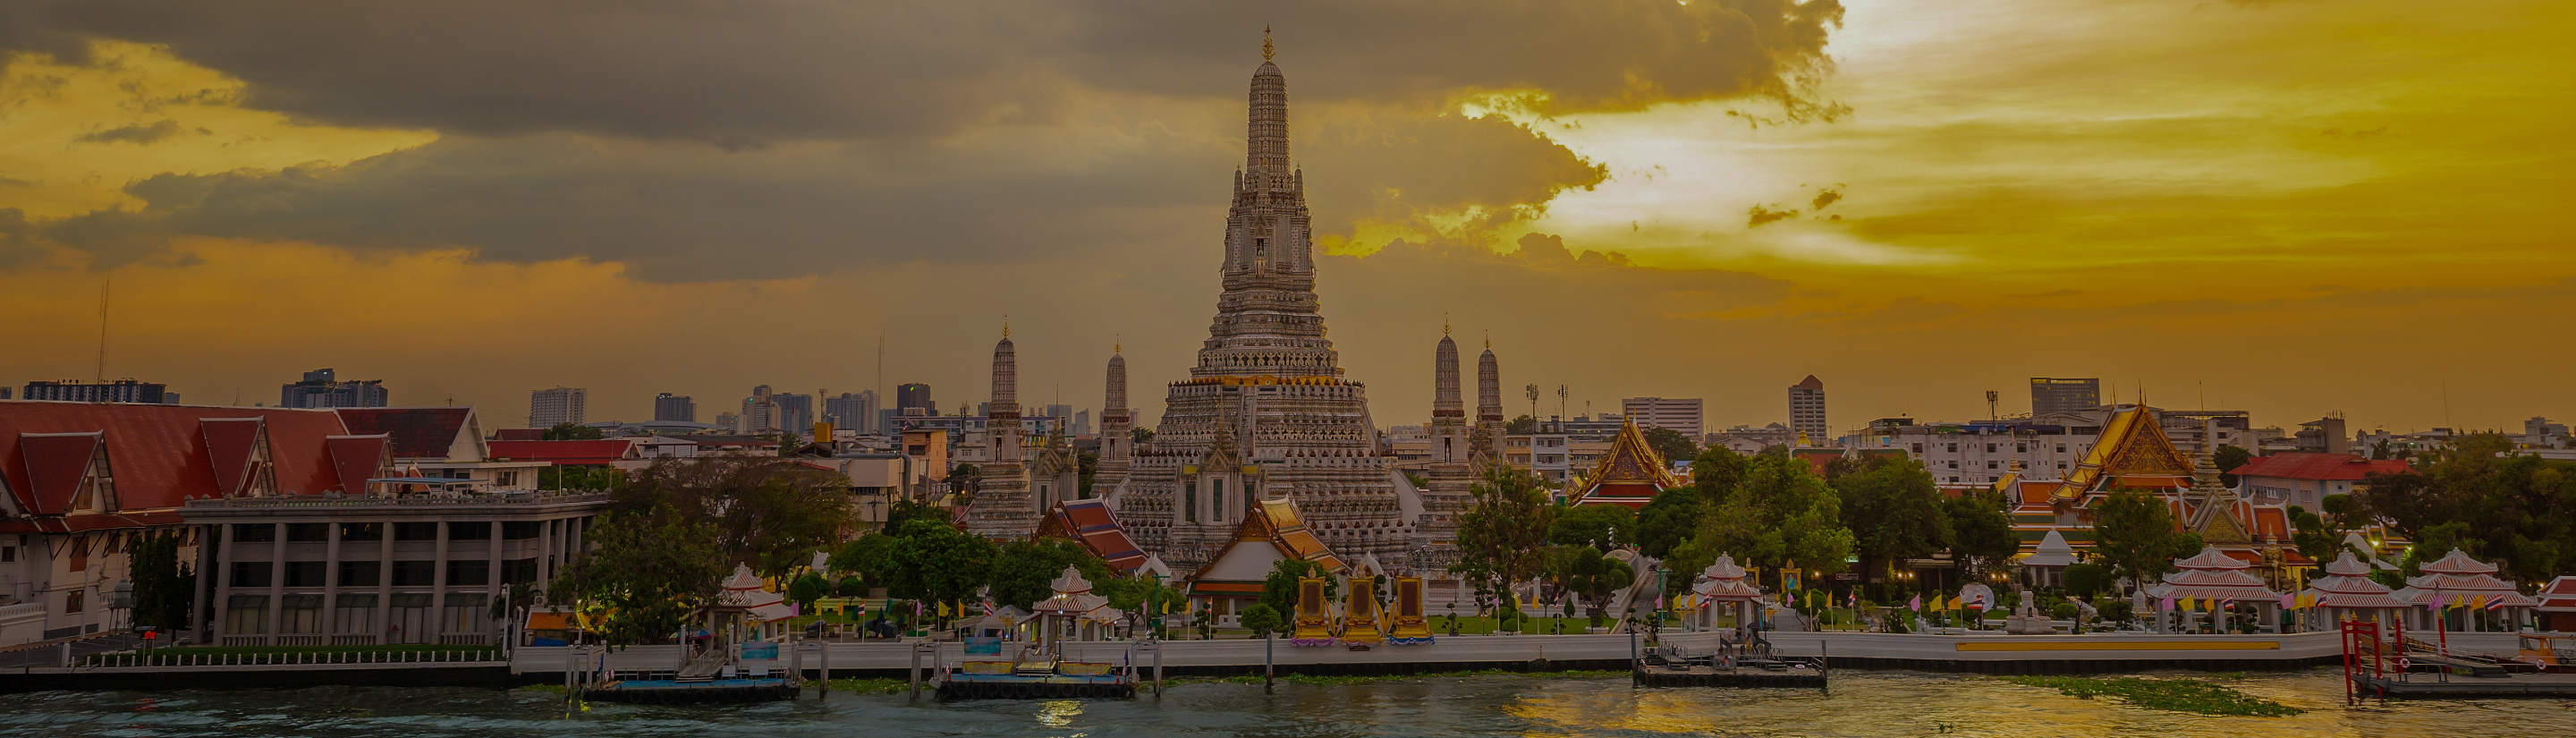 Blick auf den Tempel Wat Arun in Bangkok